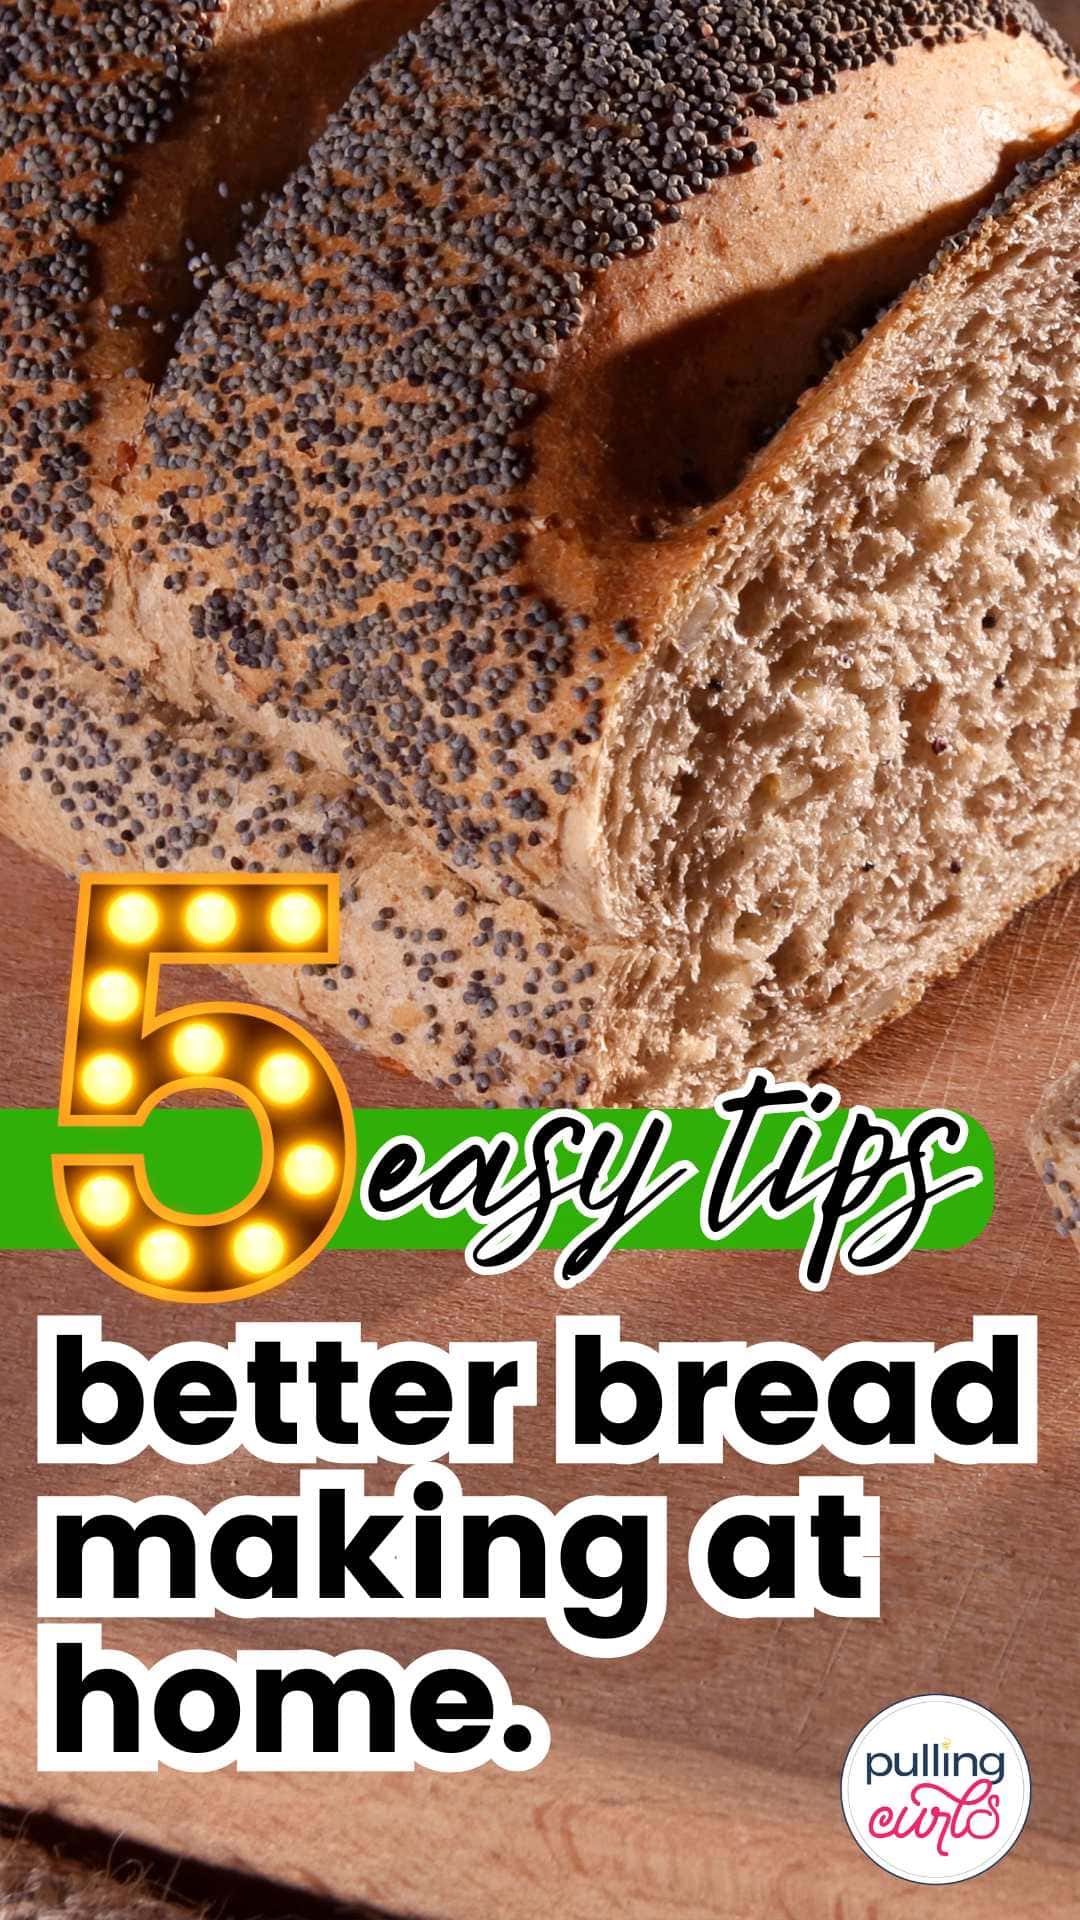 5 hacks for better bread making! via @pullingcurls